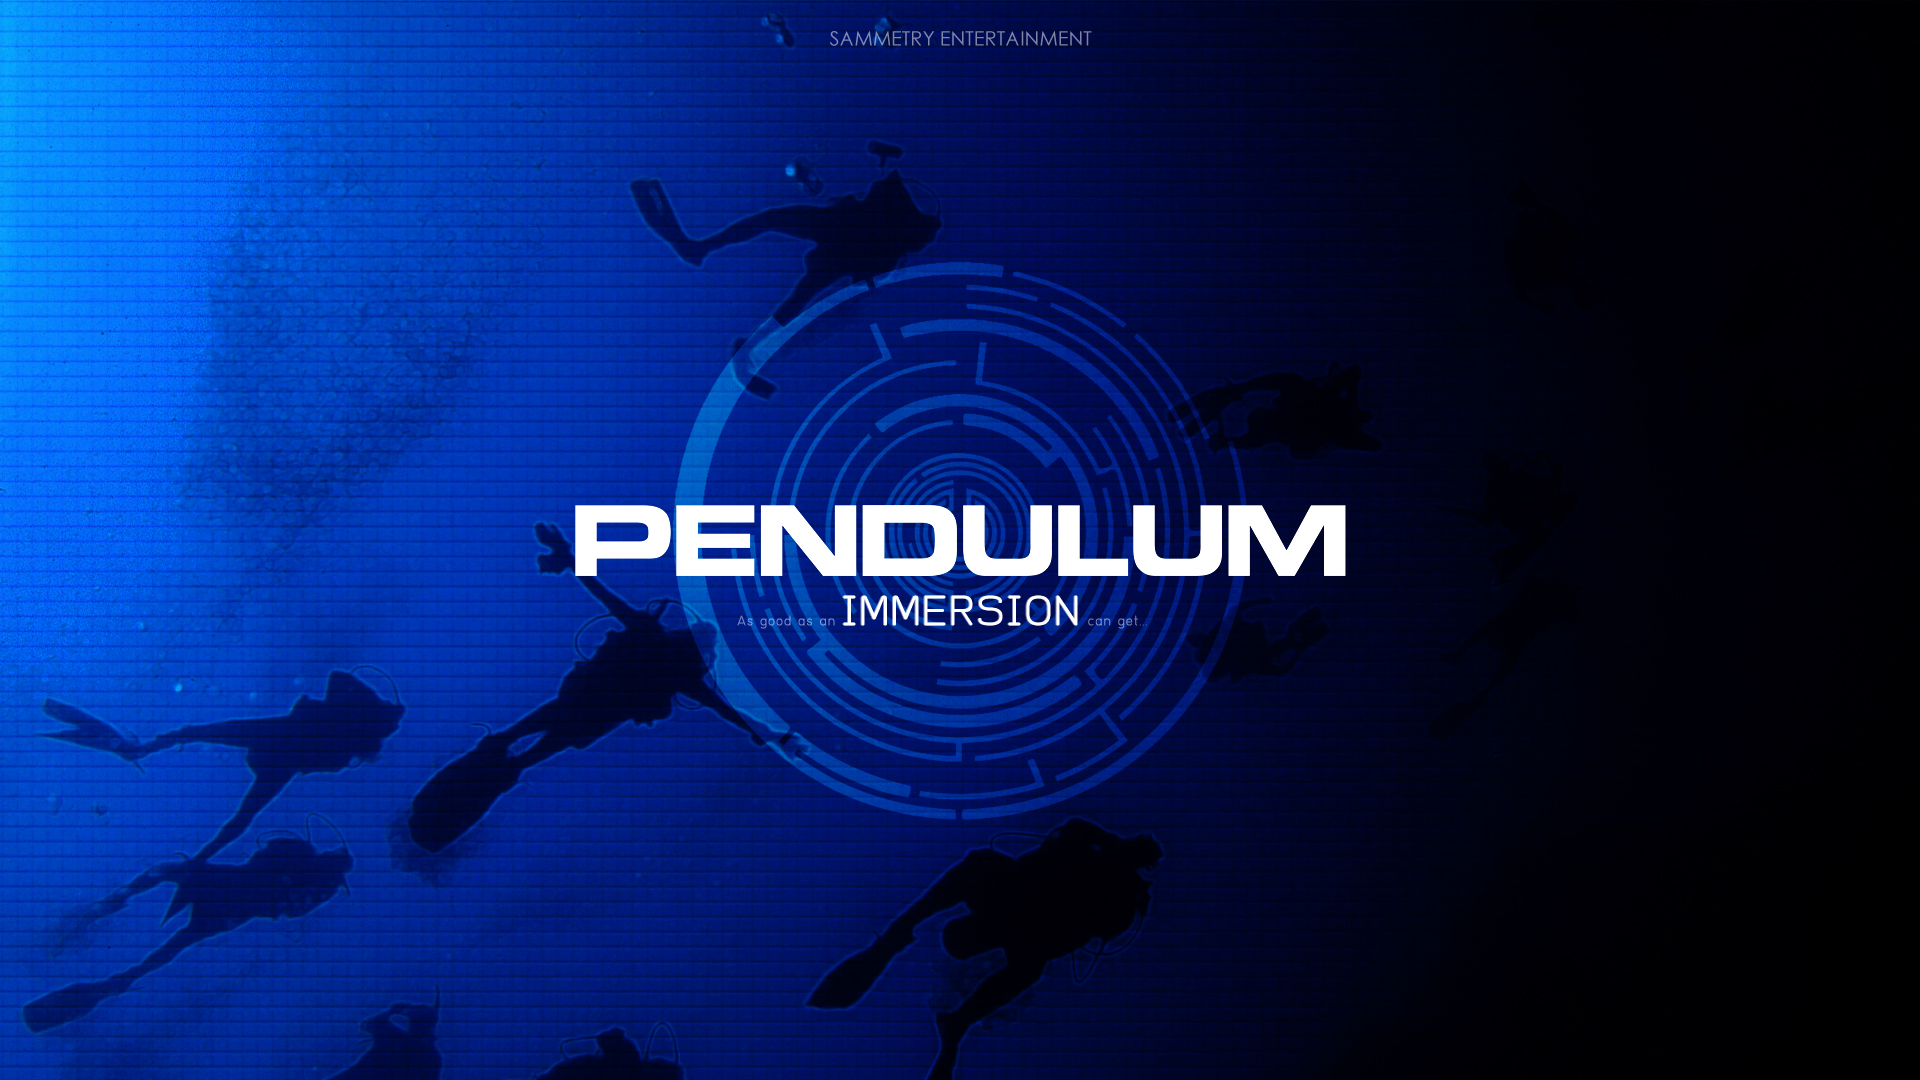 Pendulum Immersion By Sammetry